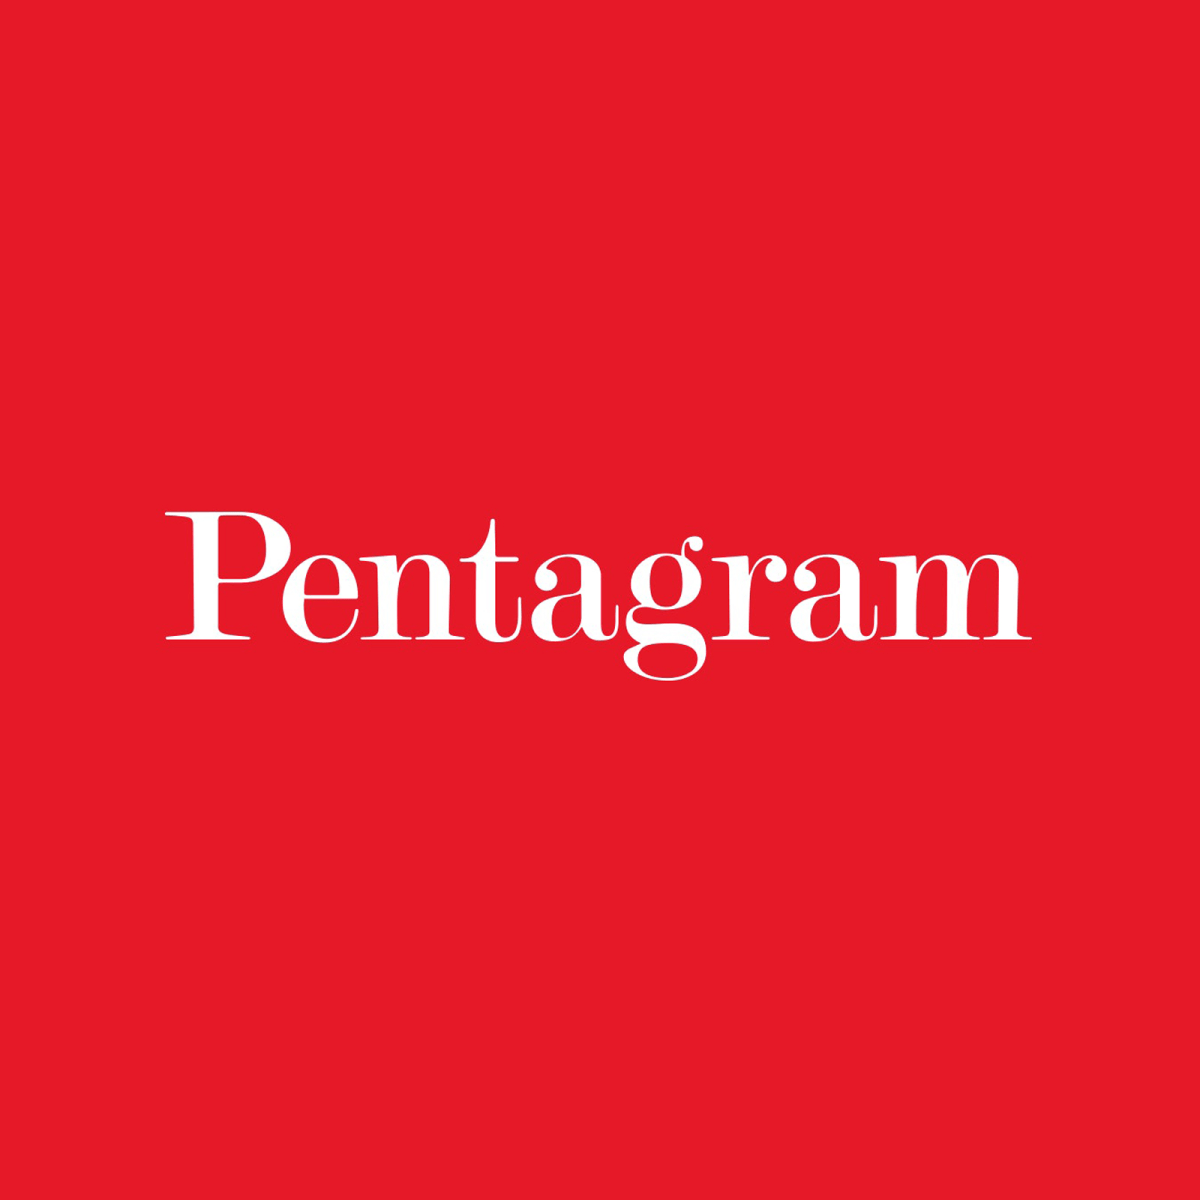 Pentagram: Five Decades of Star-studded Design | Domestika